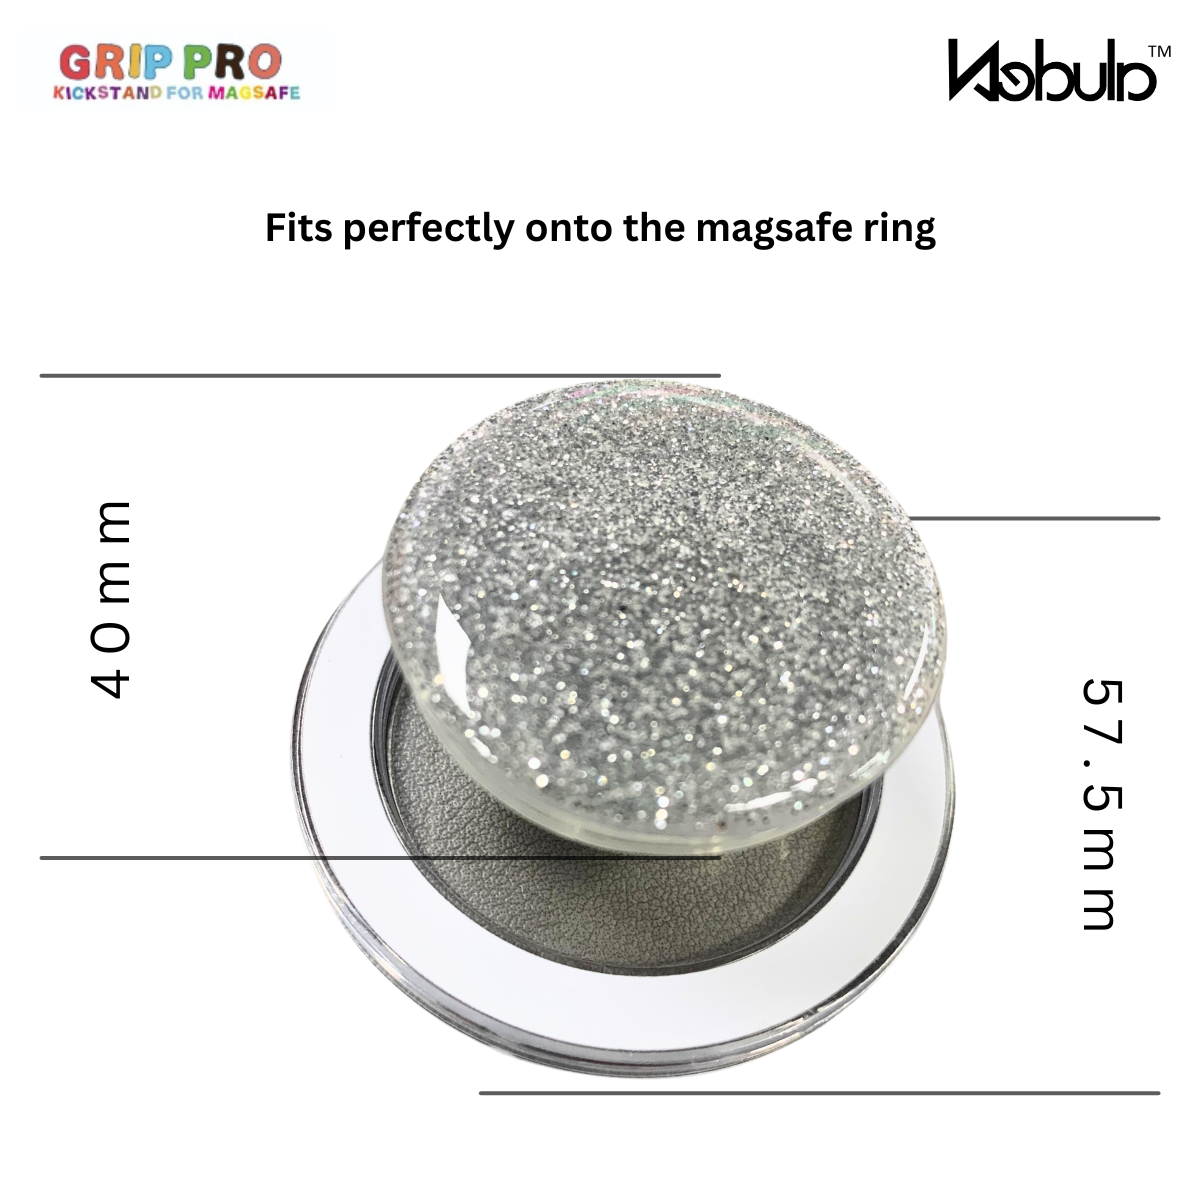 Nebula GripPro Magnetic Phone Grip Glitter Silver